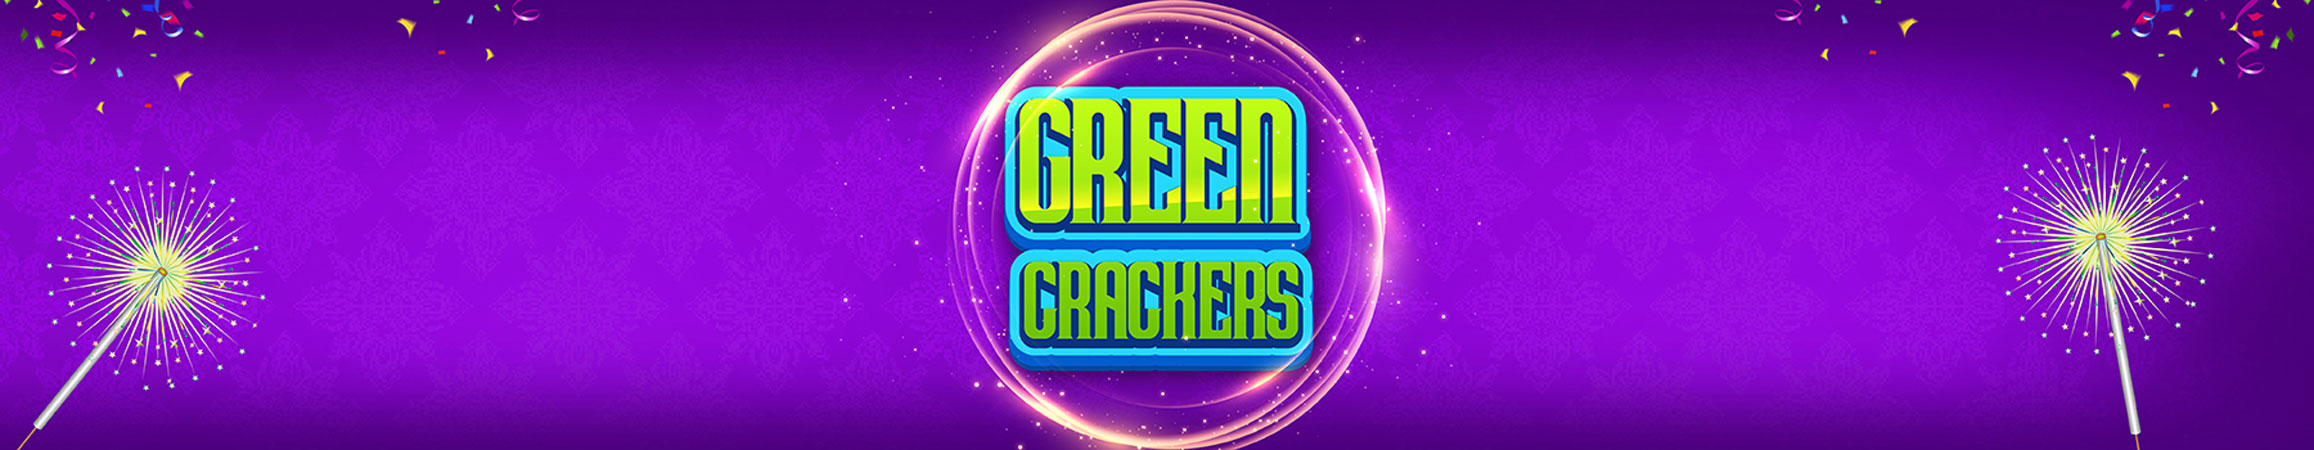 green_crackers